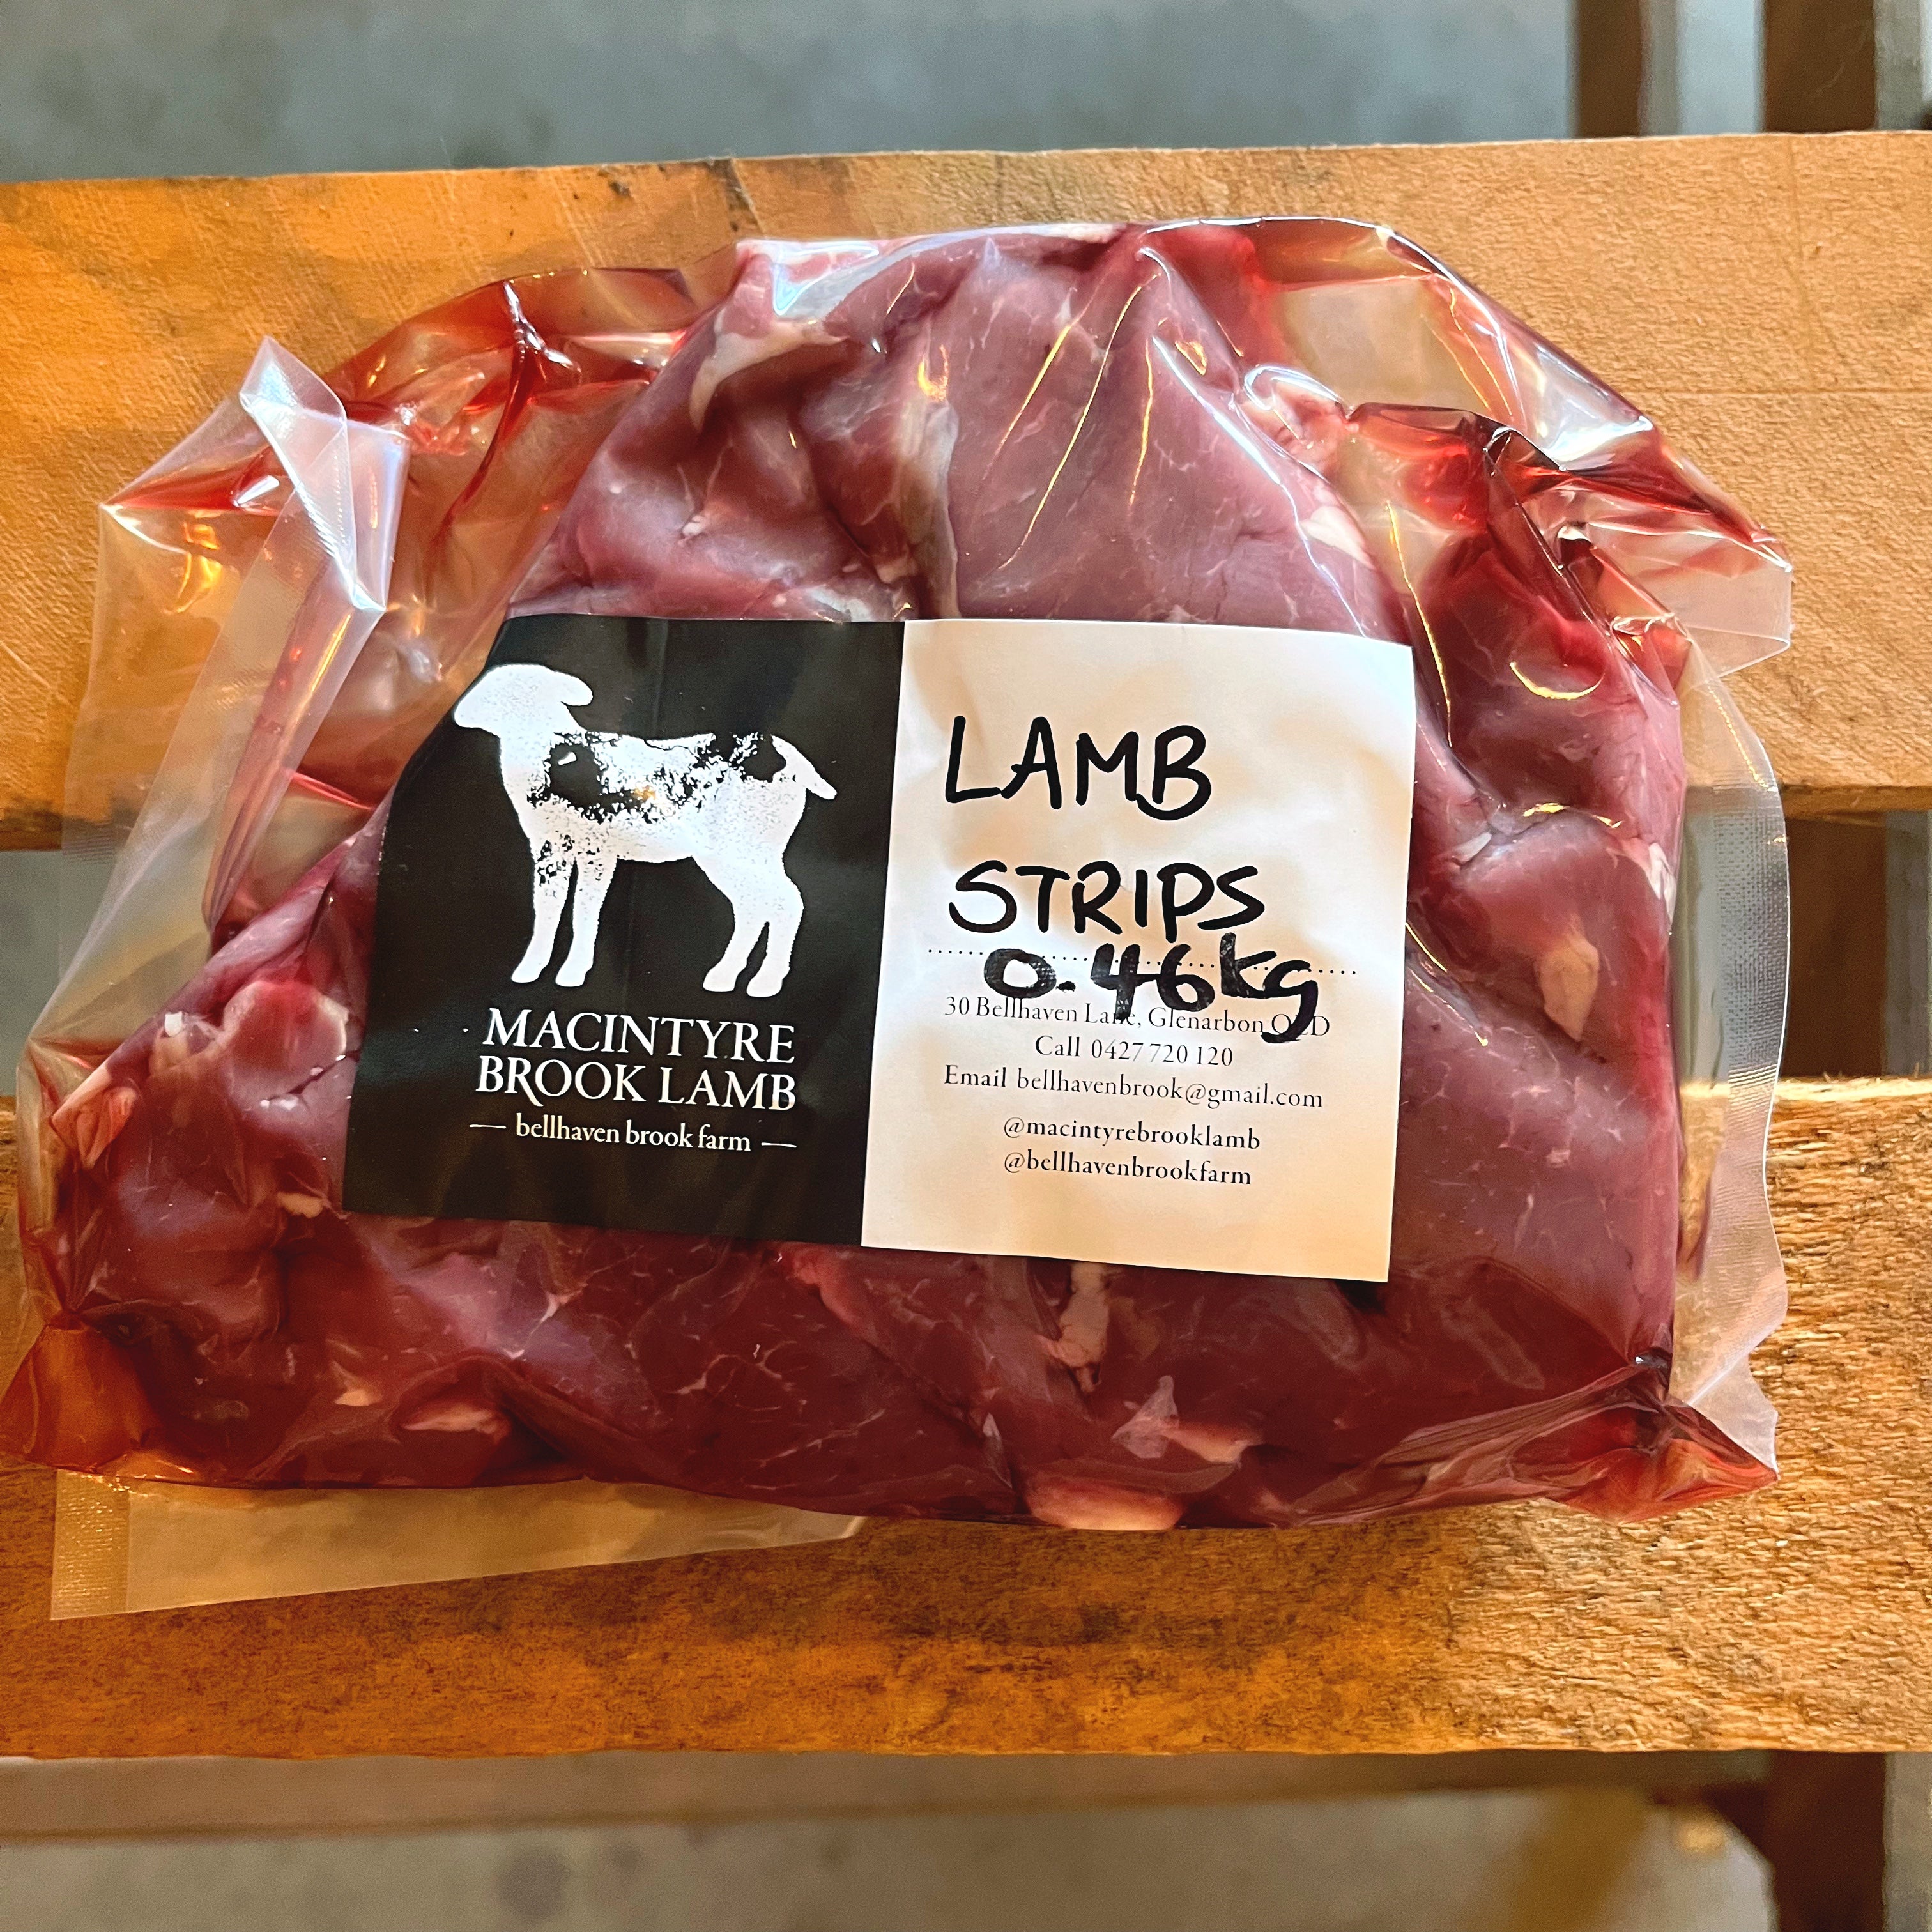 Macintyre Brook Lamb - Lamb Strips